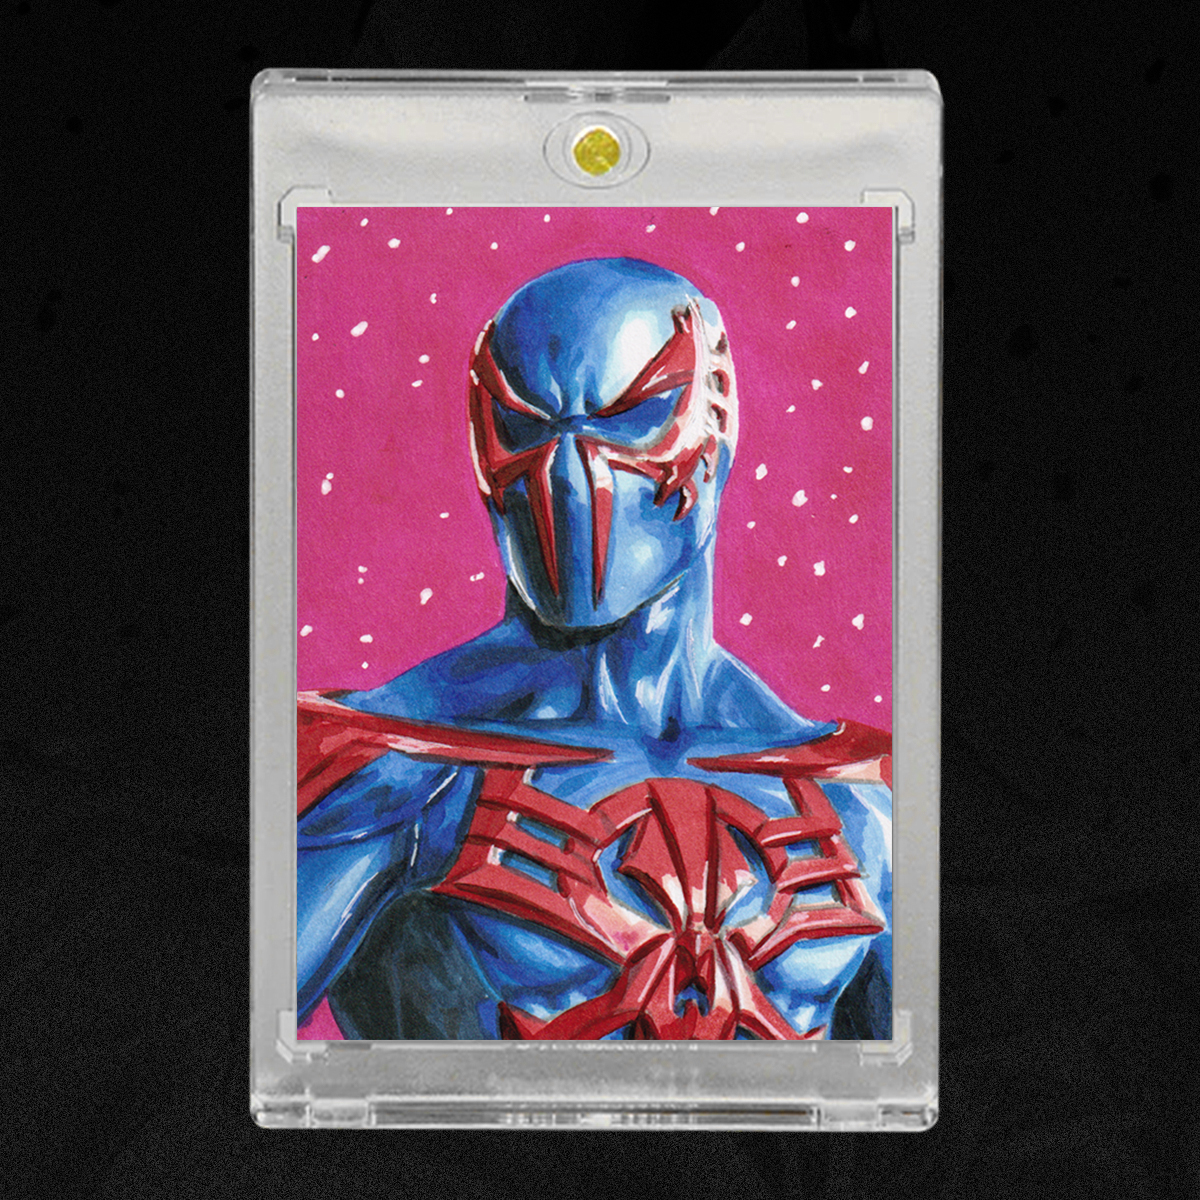 Spider-Man 2099 Sketch Card by Duke